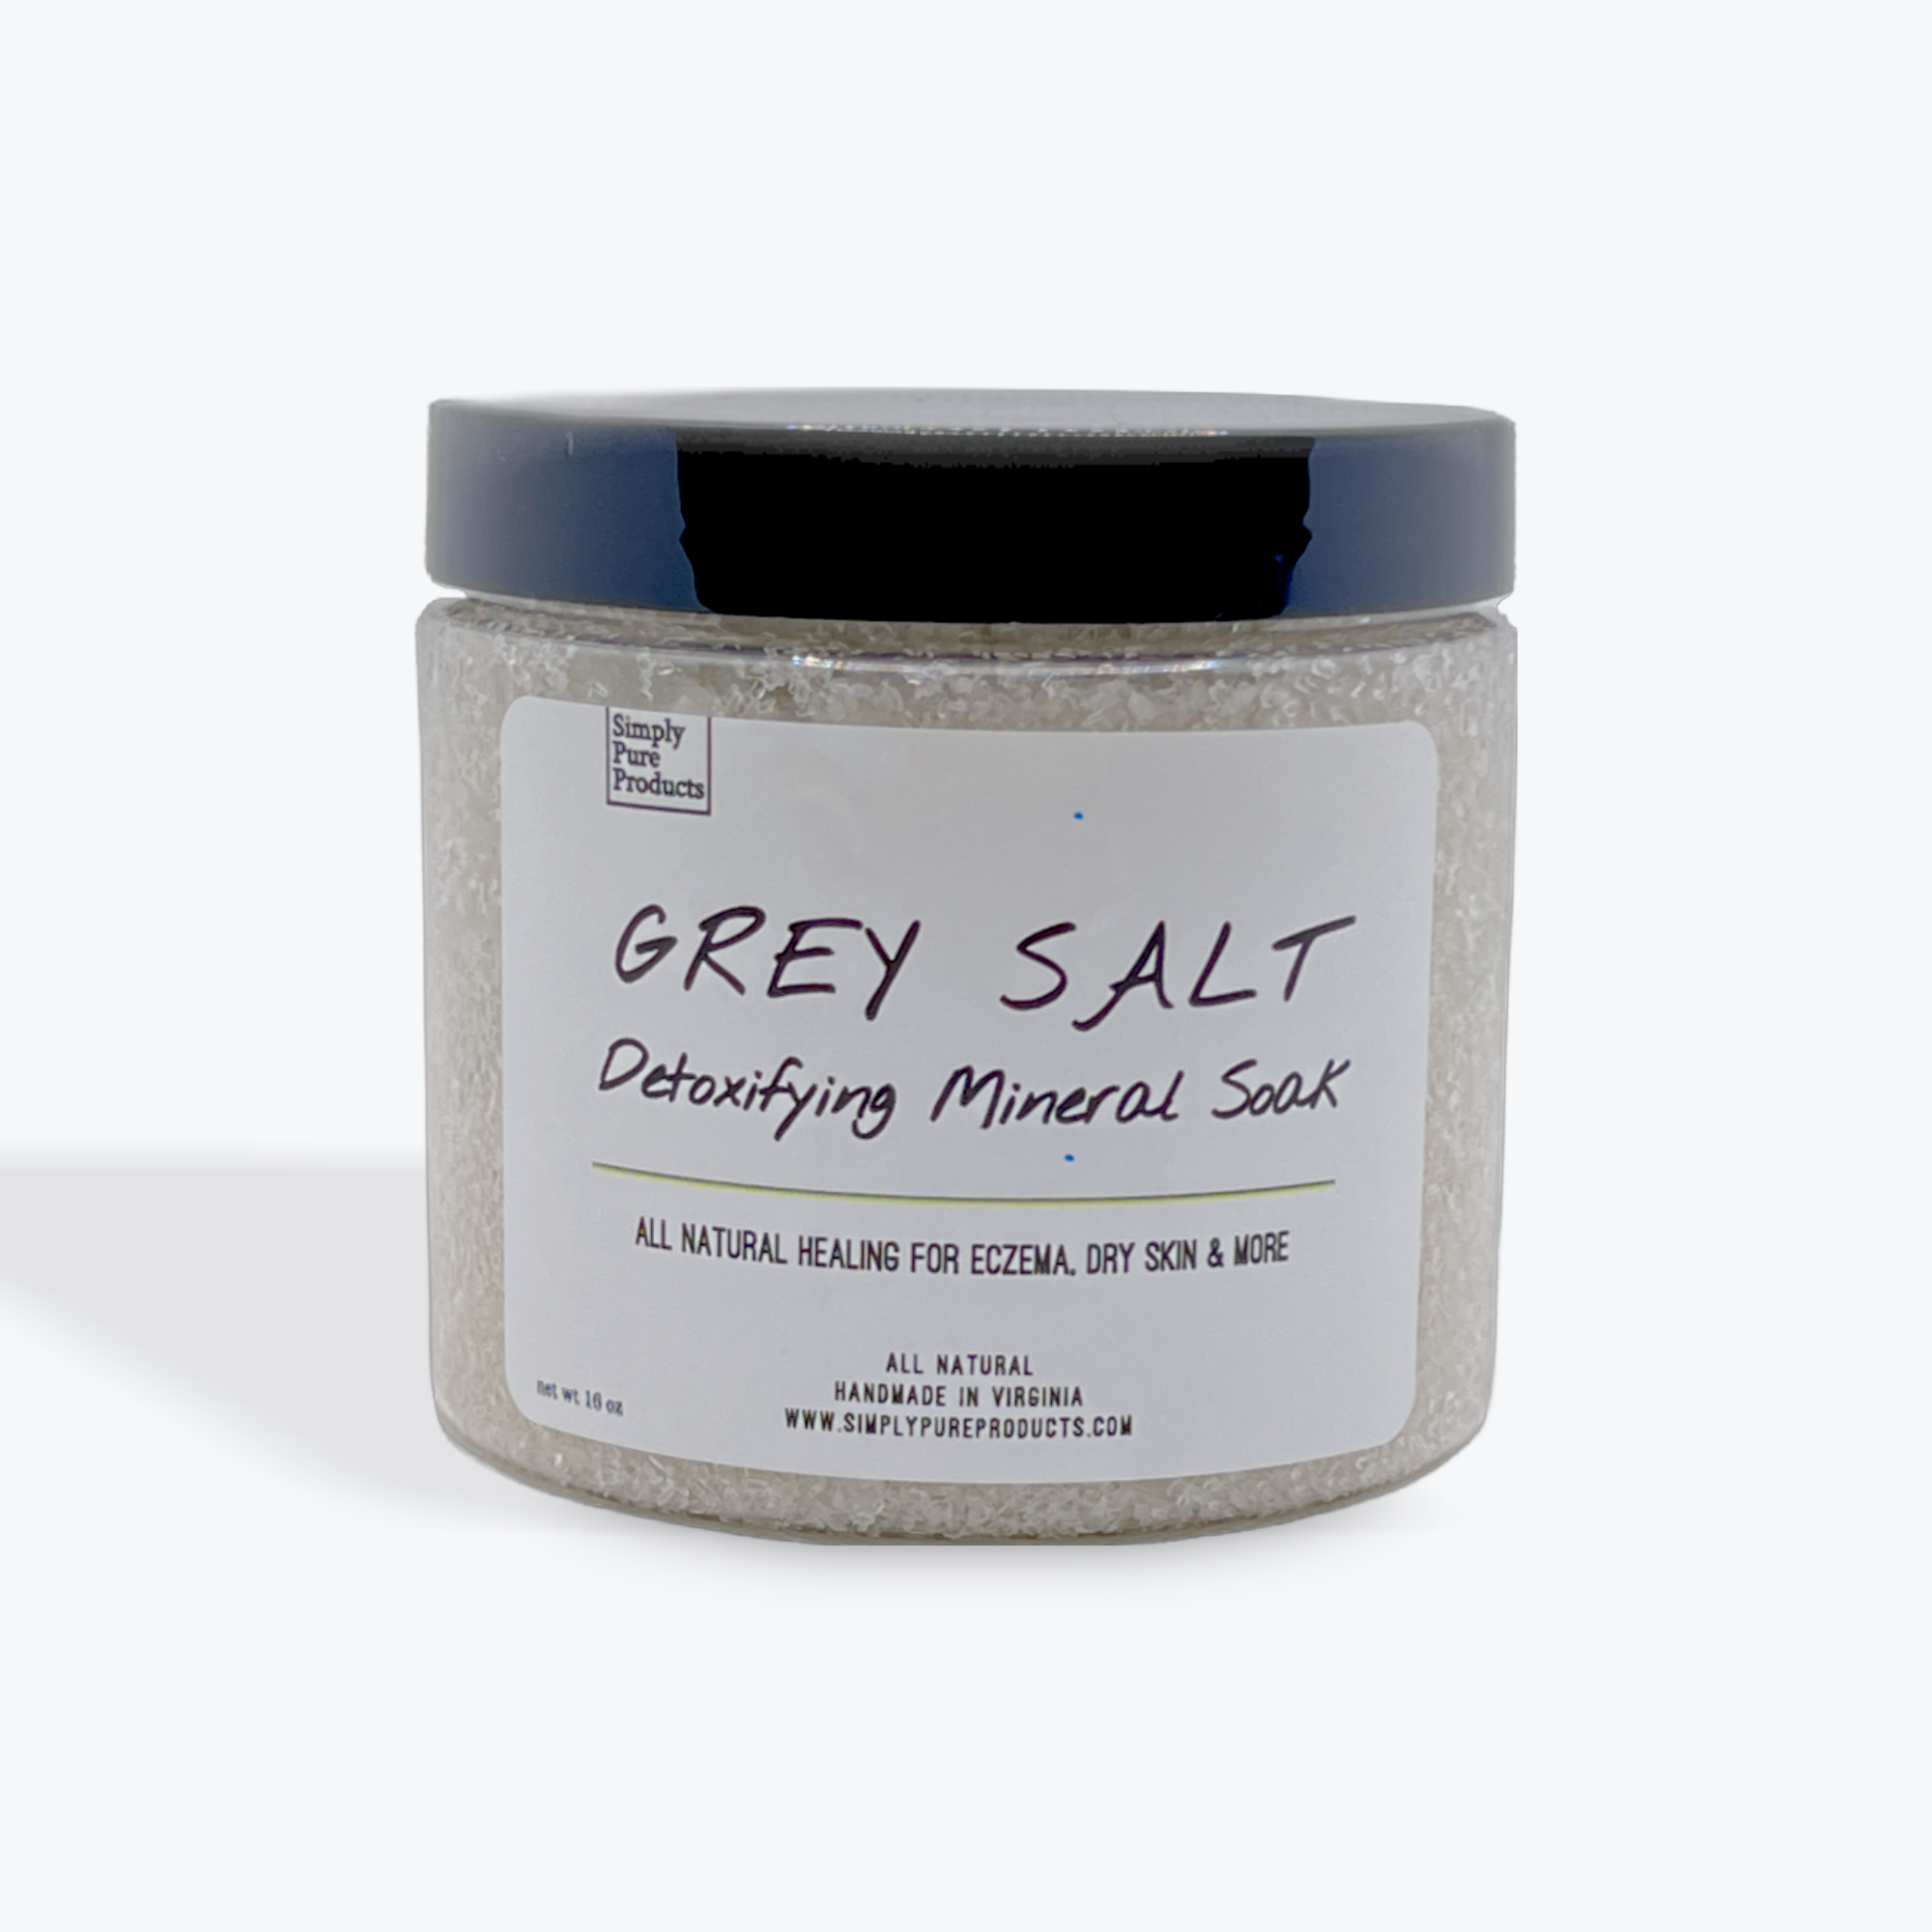 Grey Salt Mineral Soak